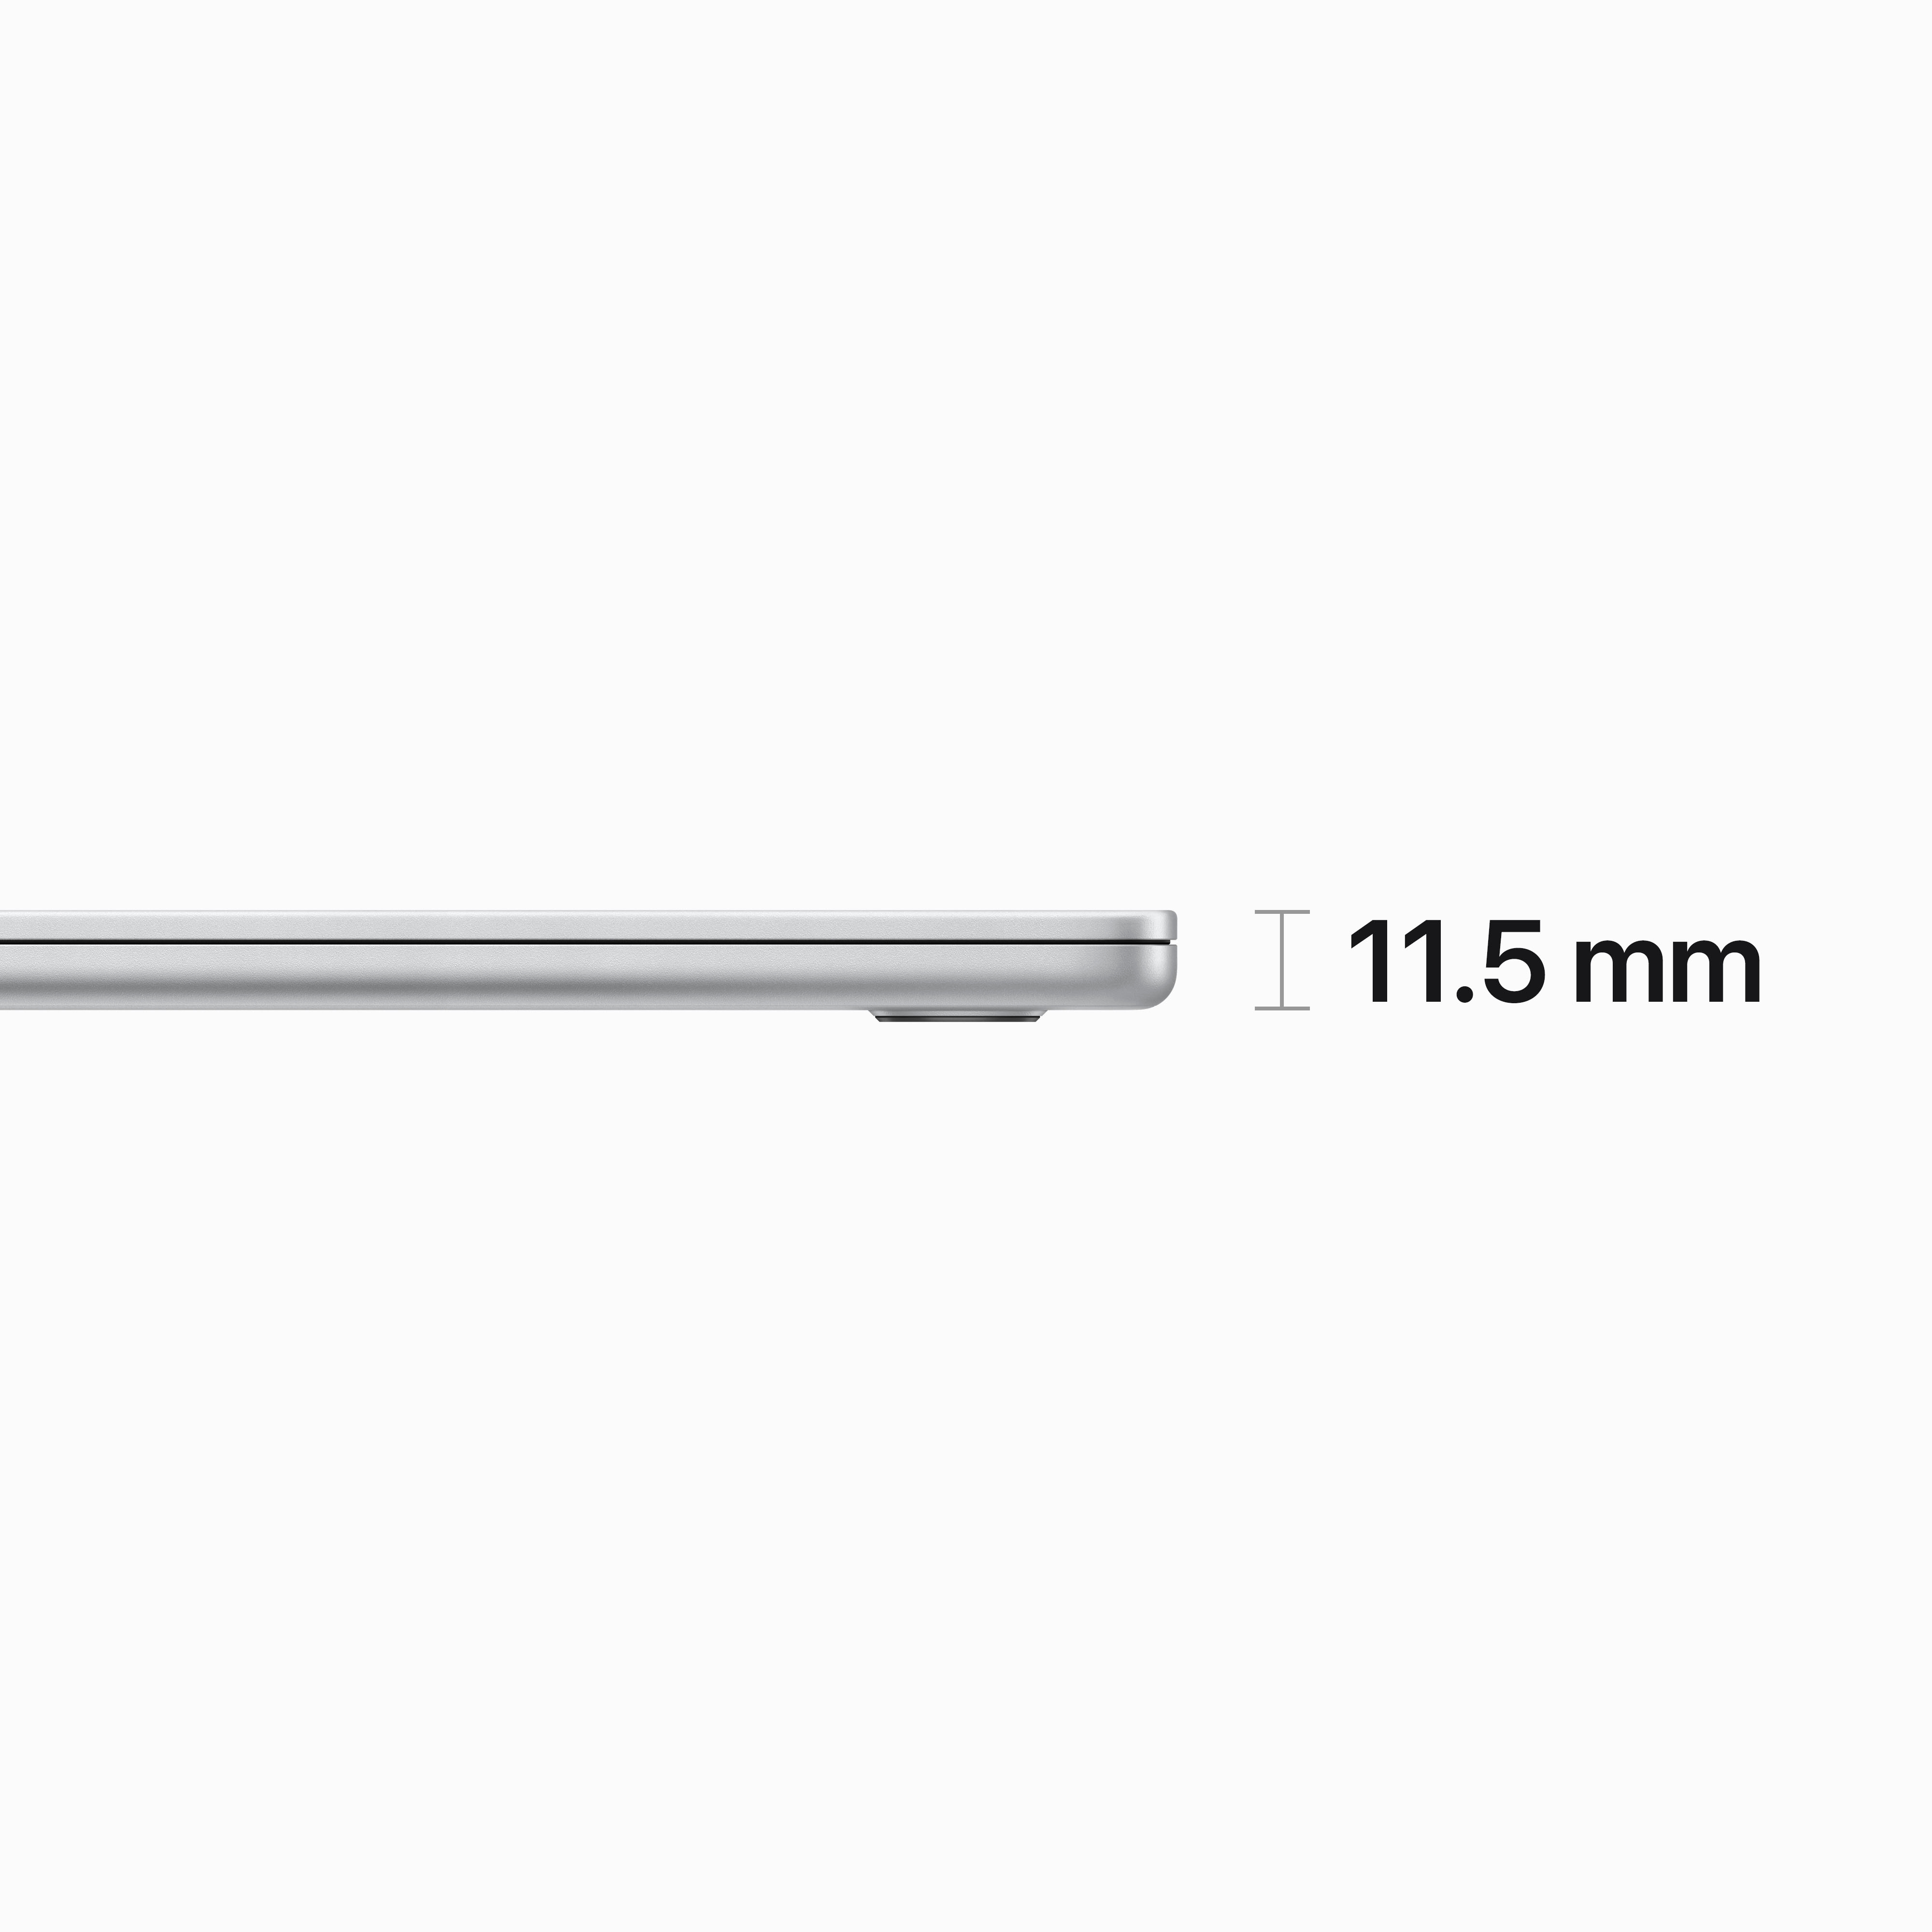 Apple MacBook Air M1 Review: Fast, Fanless, and Fantastic